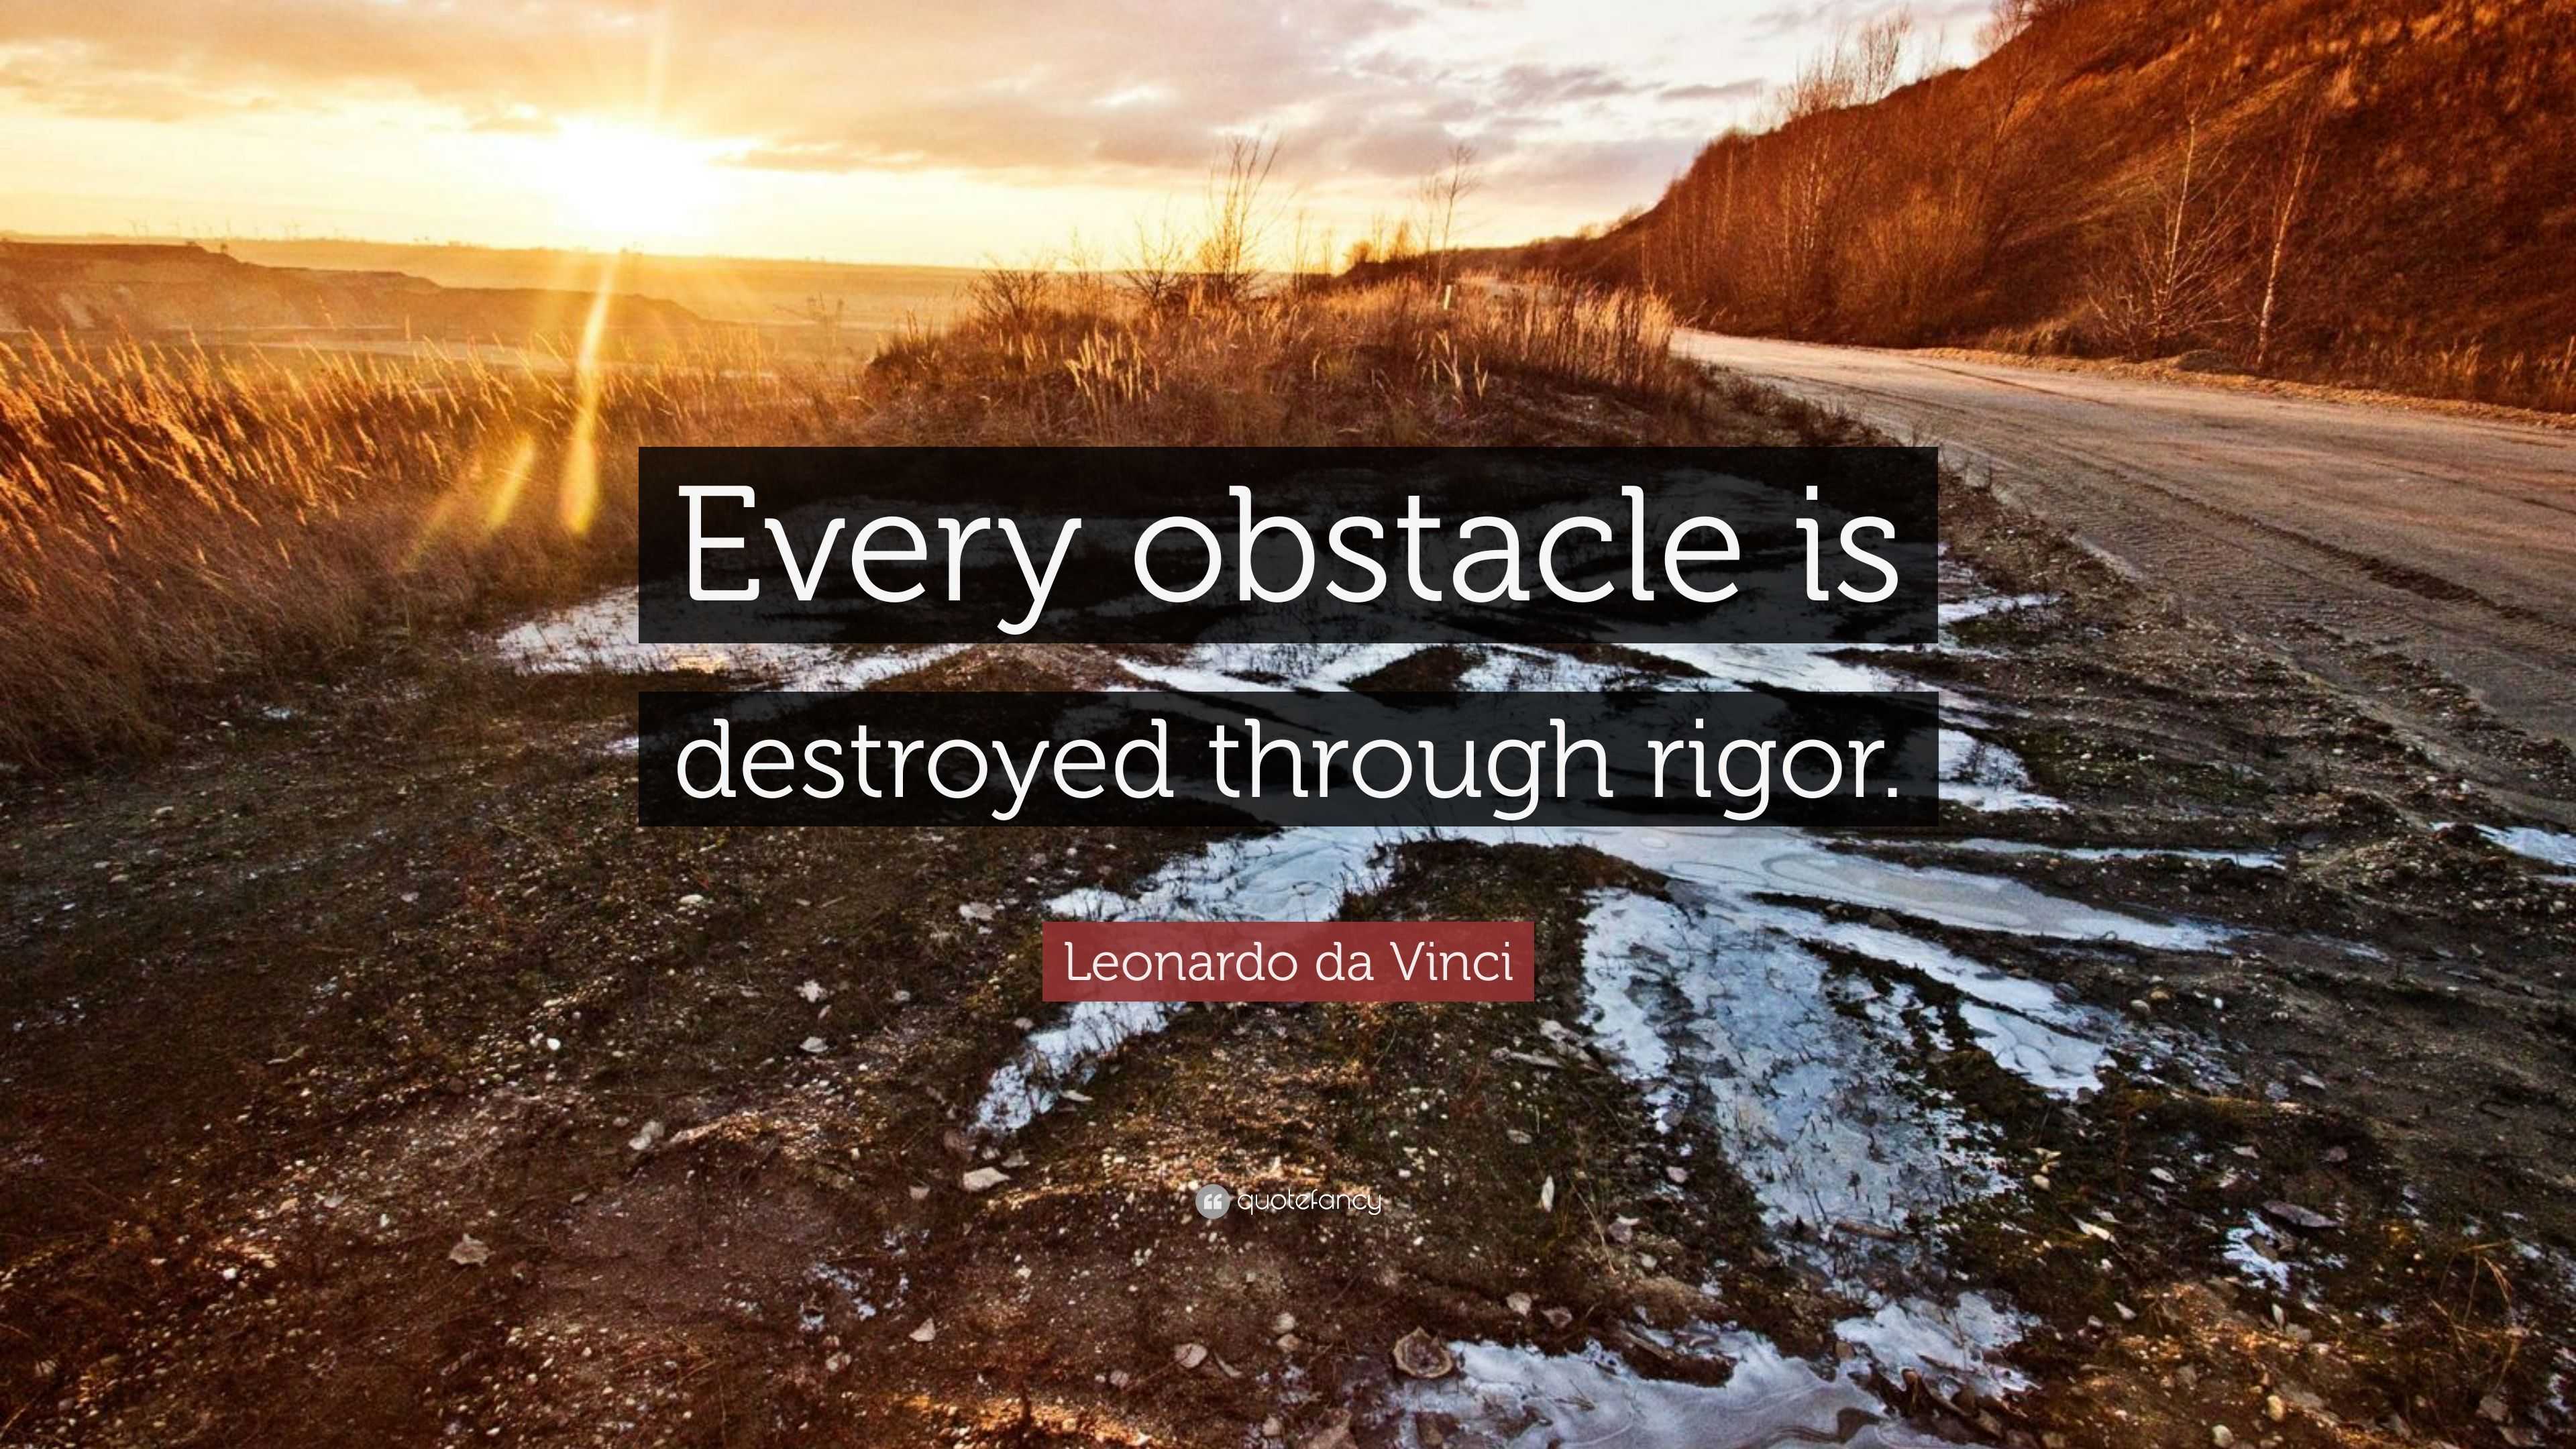 Leonardo da Vinci Quote: “Every obstacle is destroyed through rigor.”